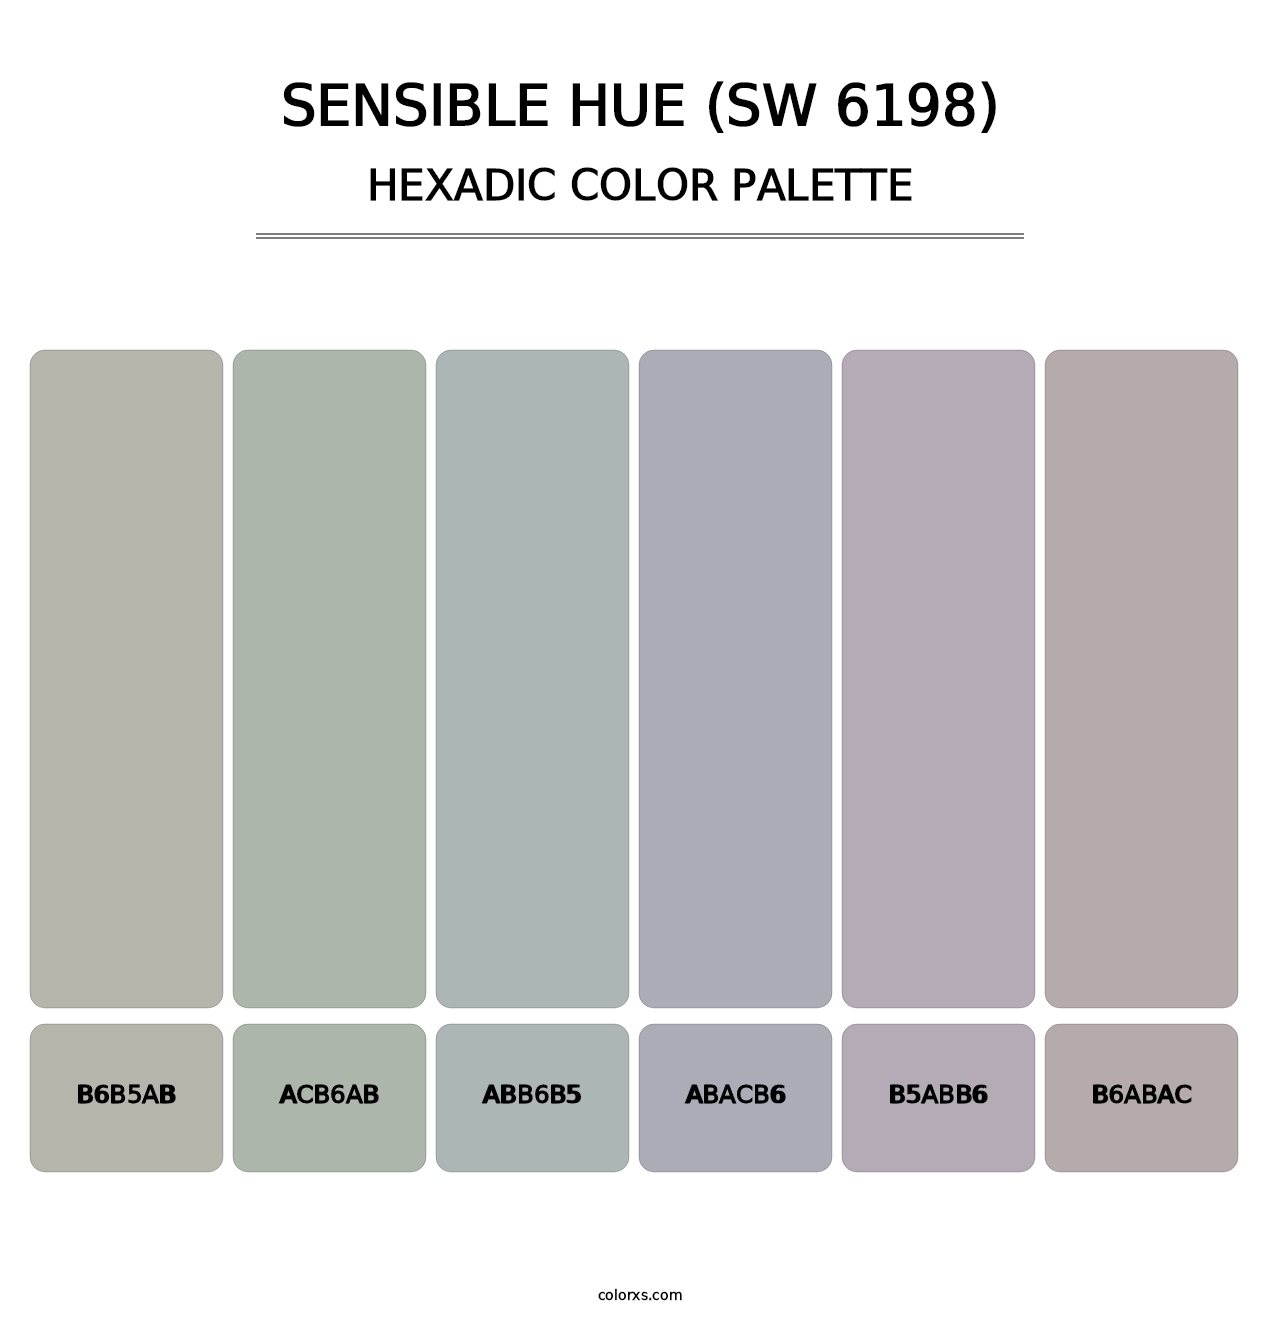 Sensible Hue (SW 6198) - Hexadic Color Palette